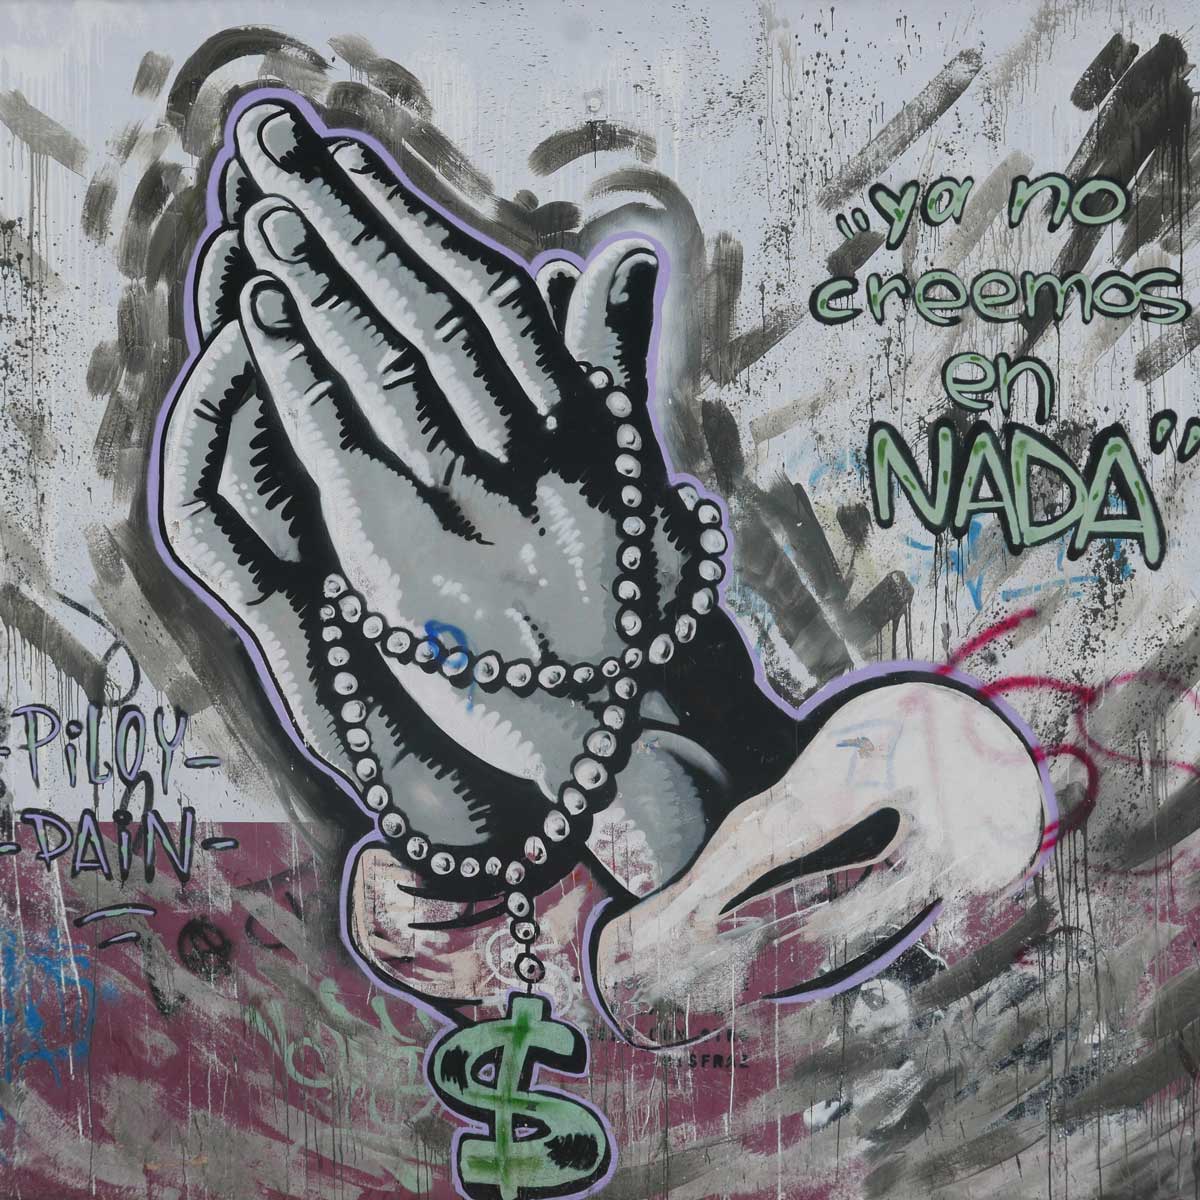 Praying hands. Street art in San Jose, Costa Rica